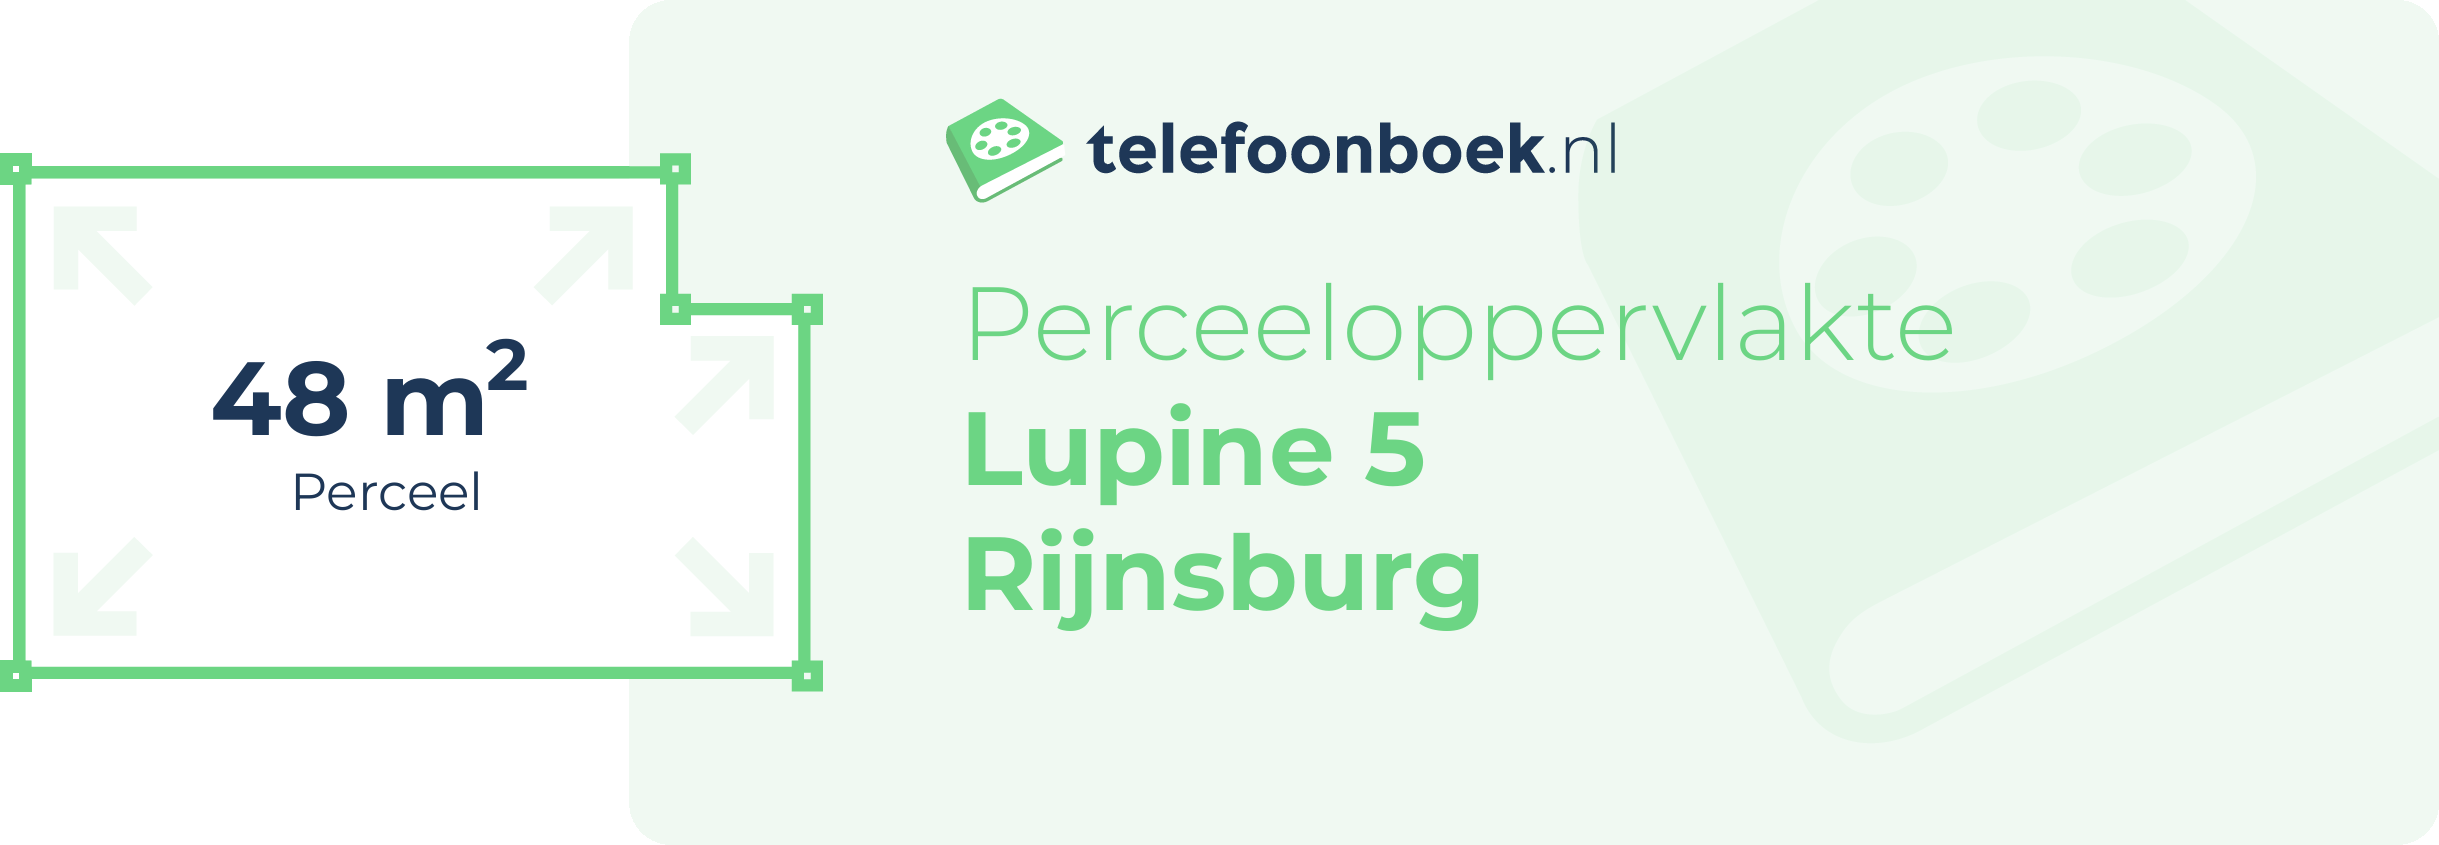 Perceeloppervlakte Lupine 5 Rijnsburg